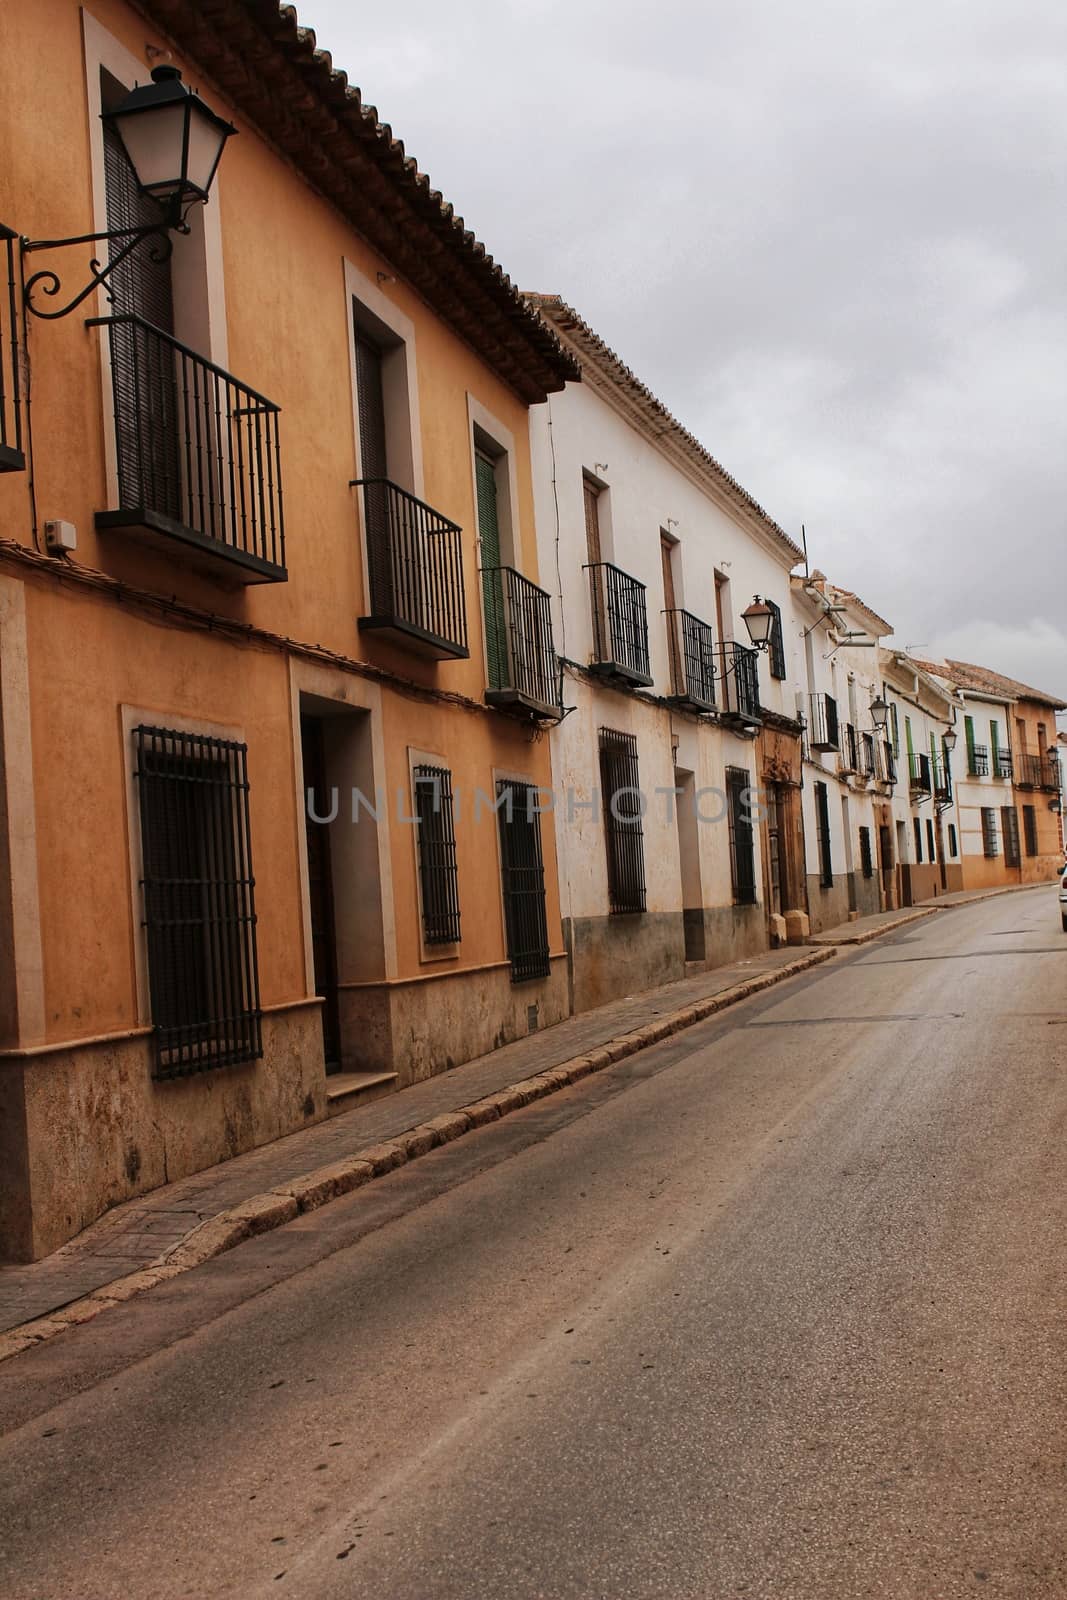 Old and majestic houses in the streets of Villanueva de los Infantes village, Ciudad Real community, Spain.